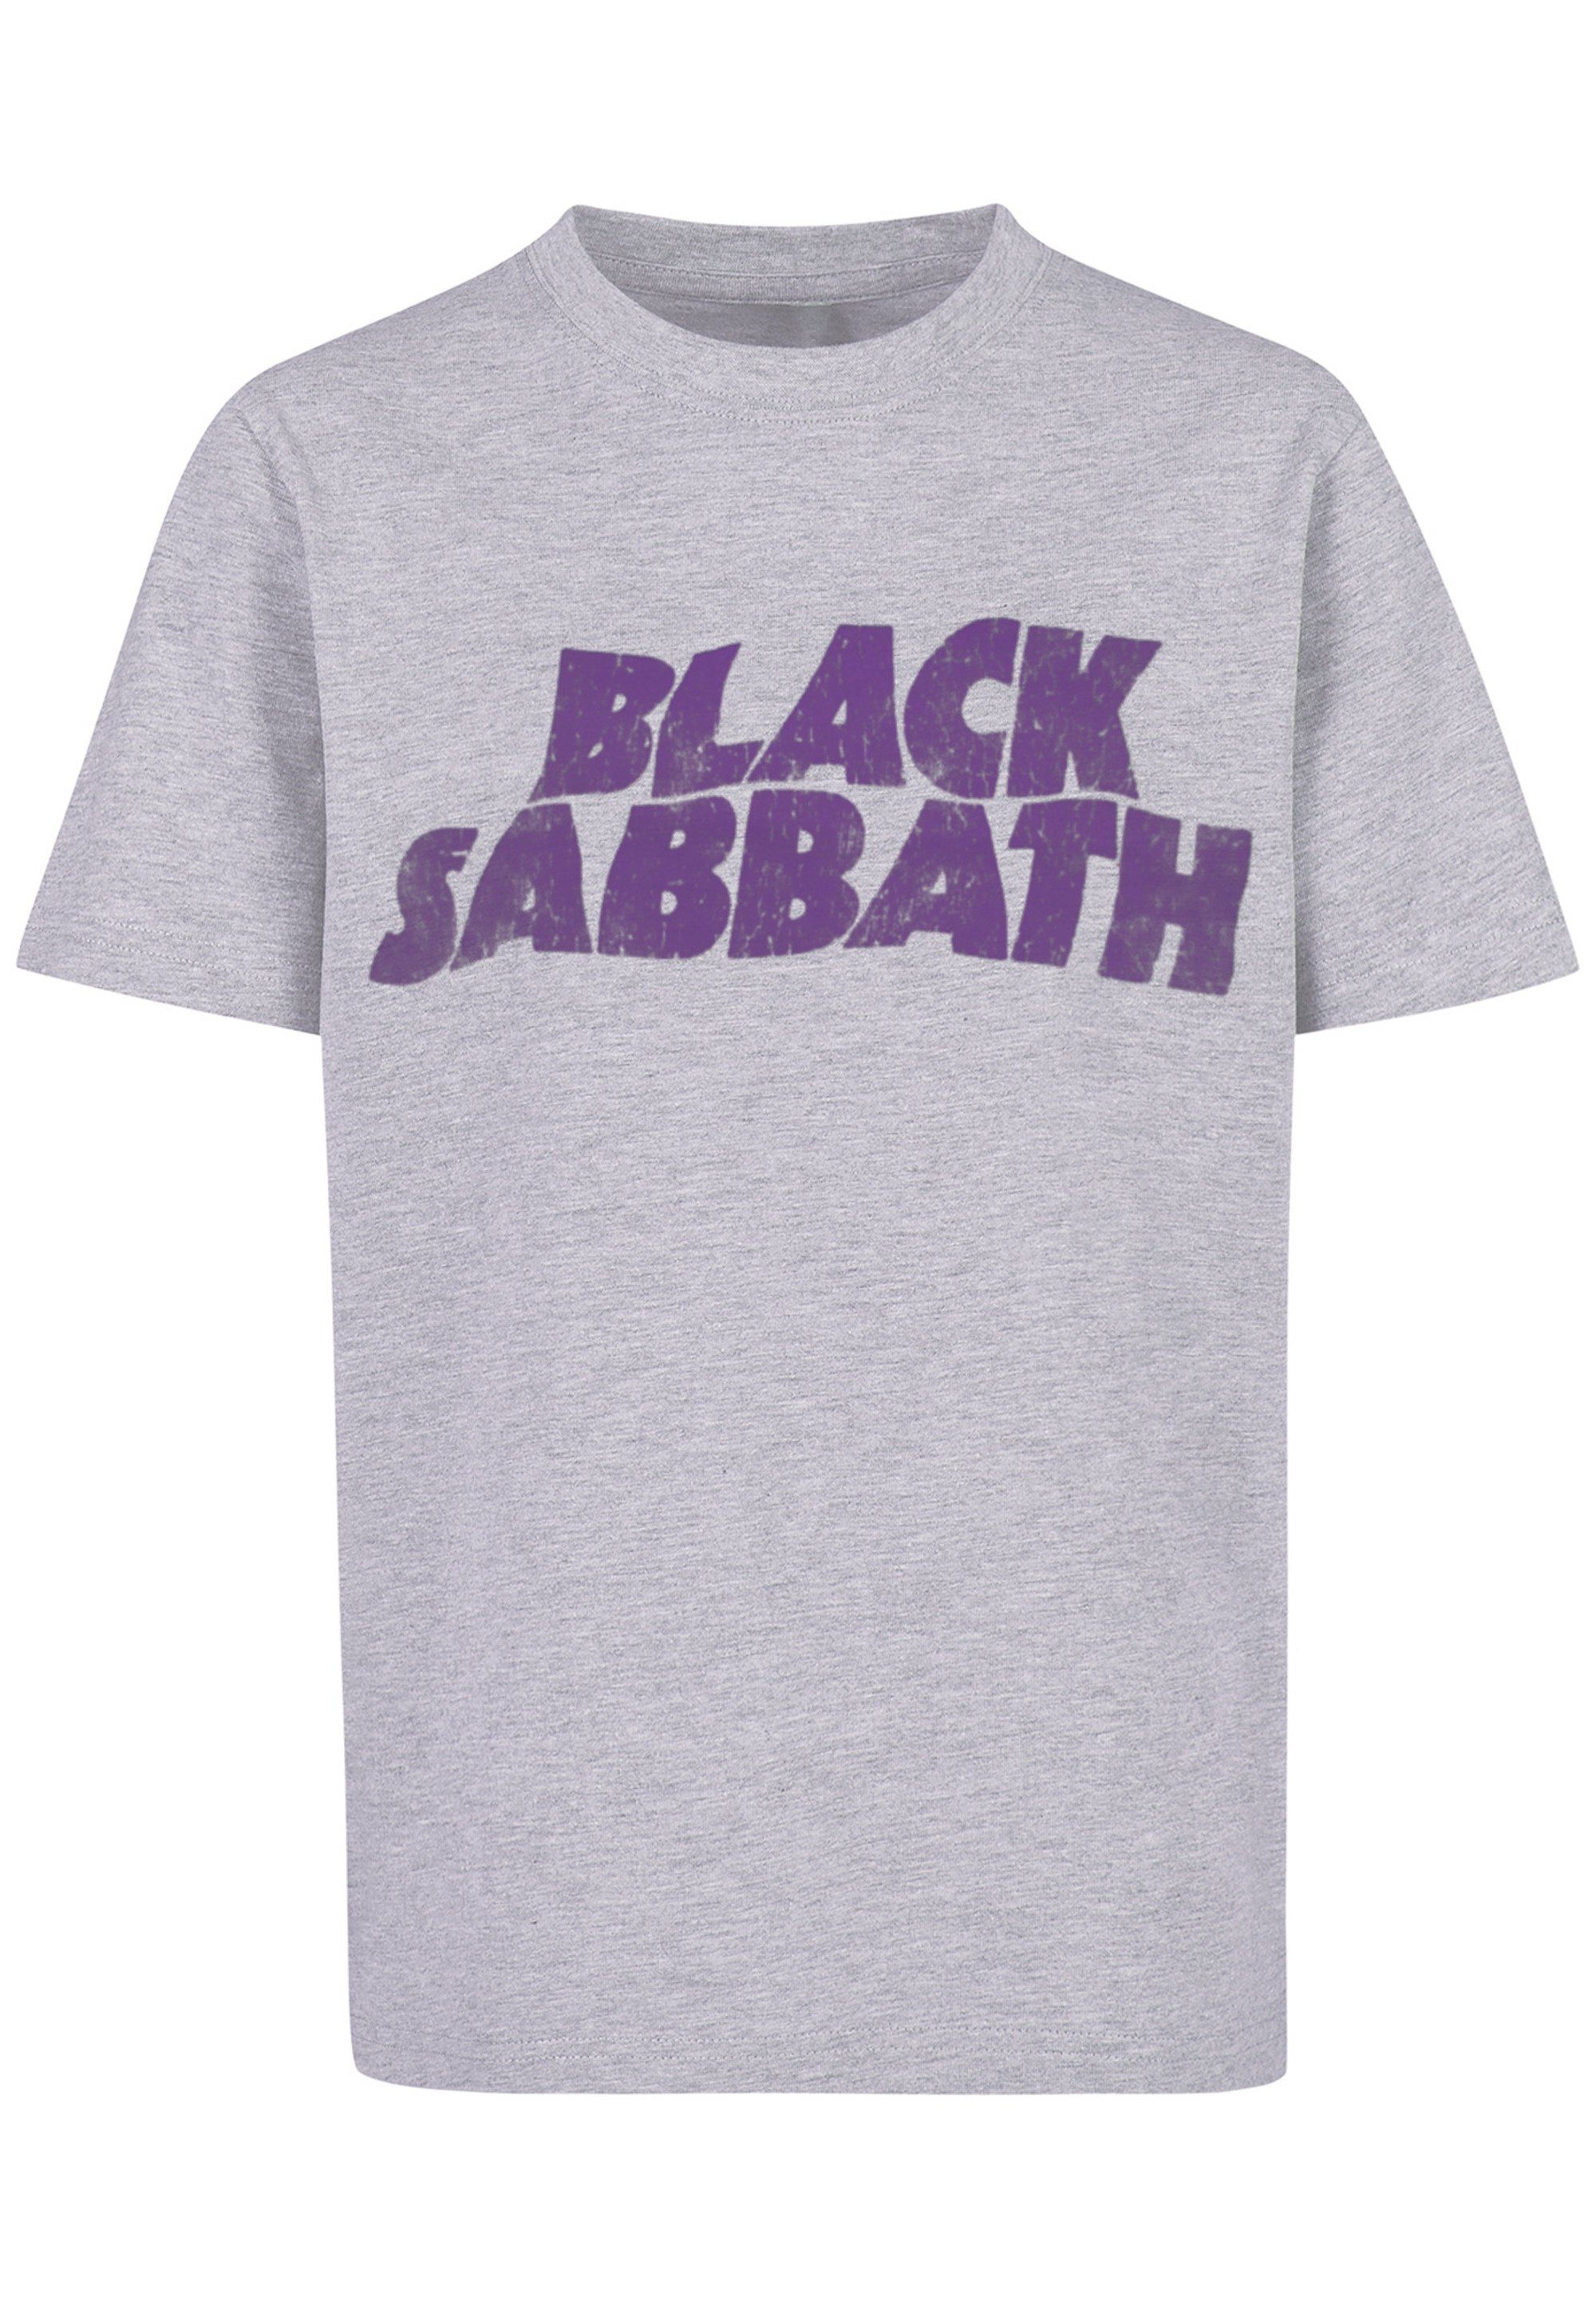 Print F4NT4STIC Wavy Band Black Black Logo Heavy Sabbath grey heather Metal Distressed T-Shirt